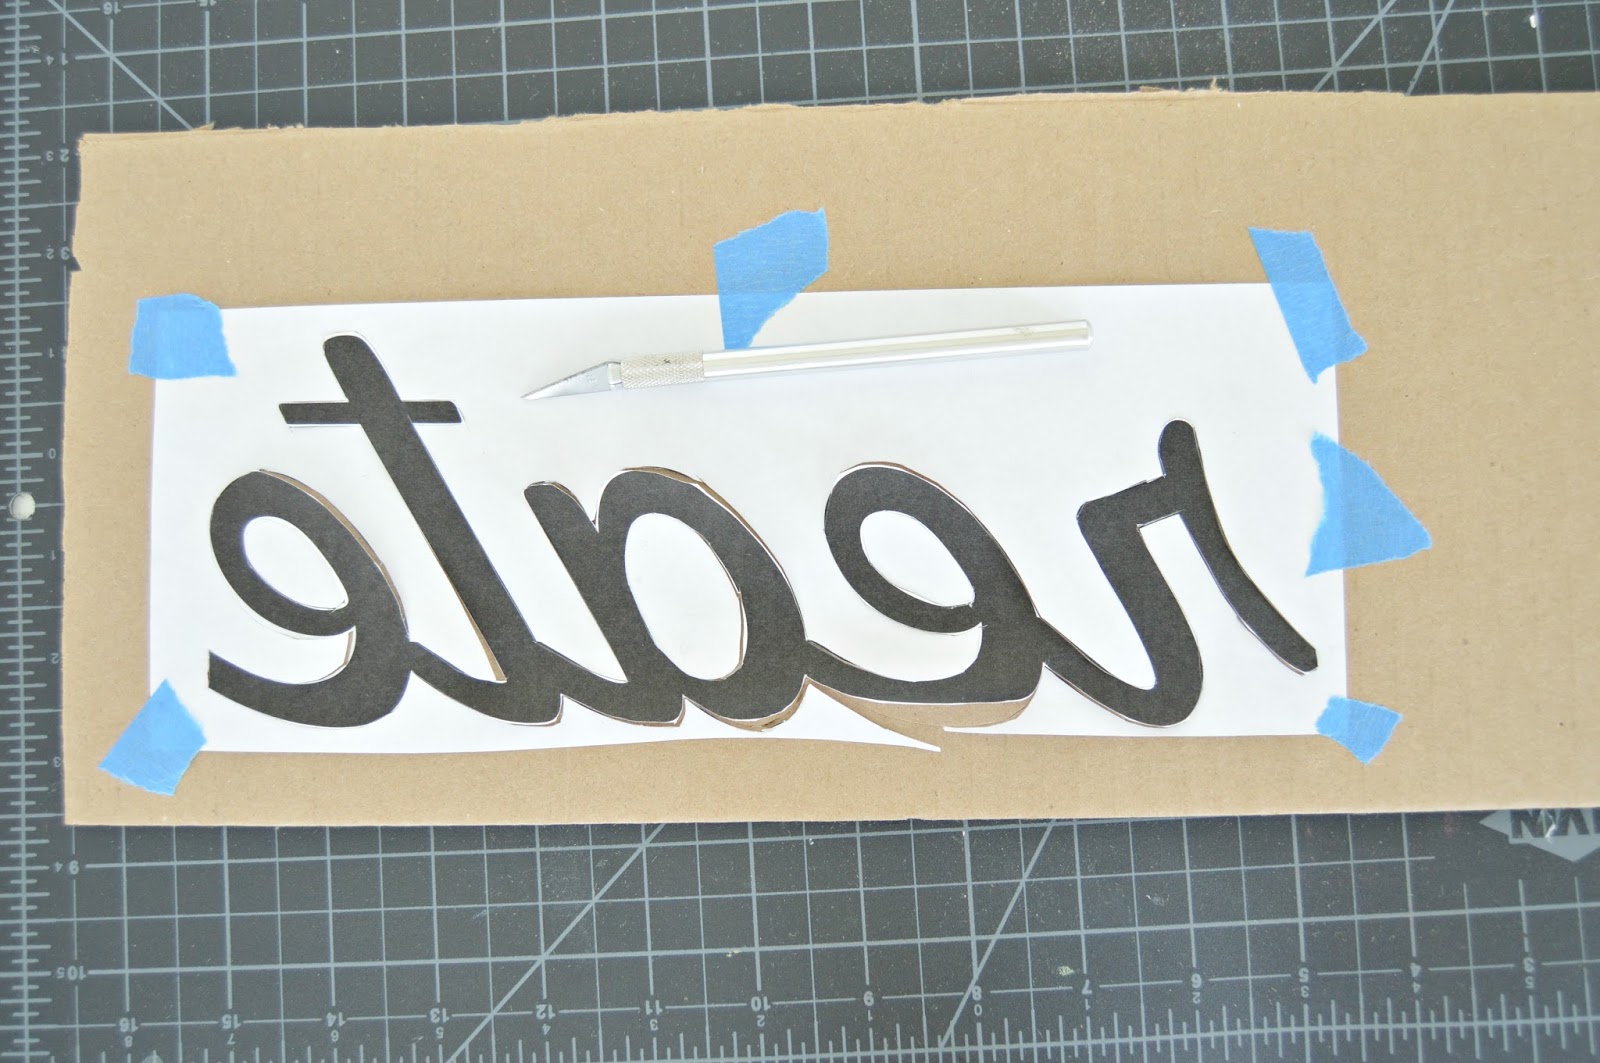 Vikalpah: DIY textured cardboard letters